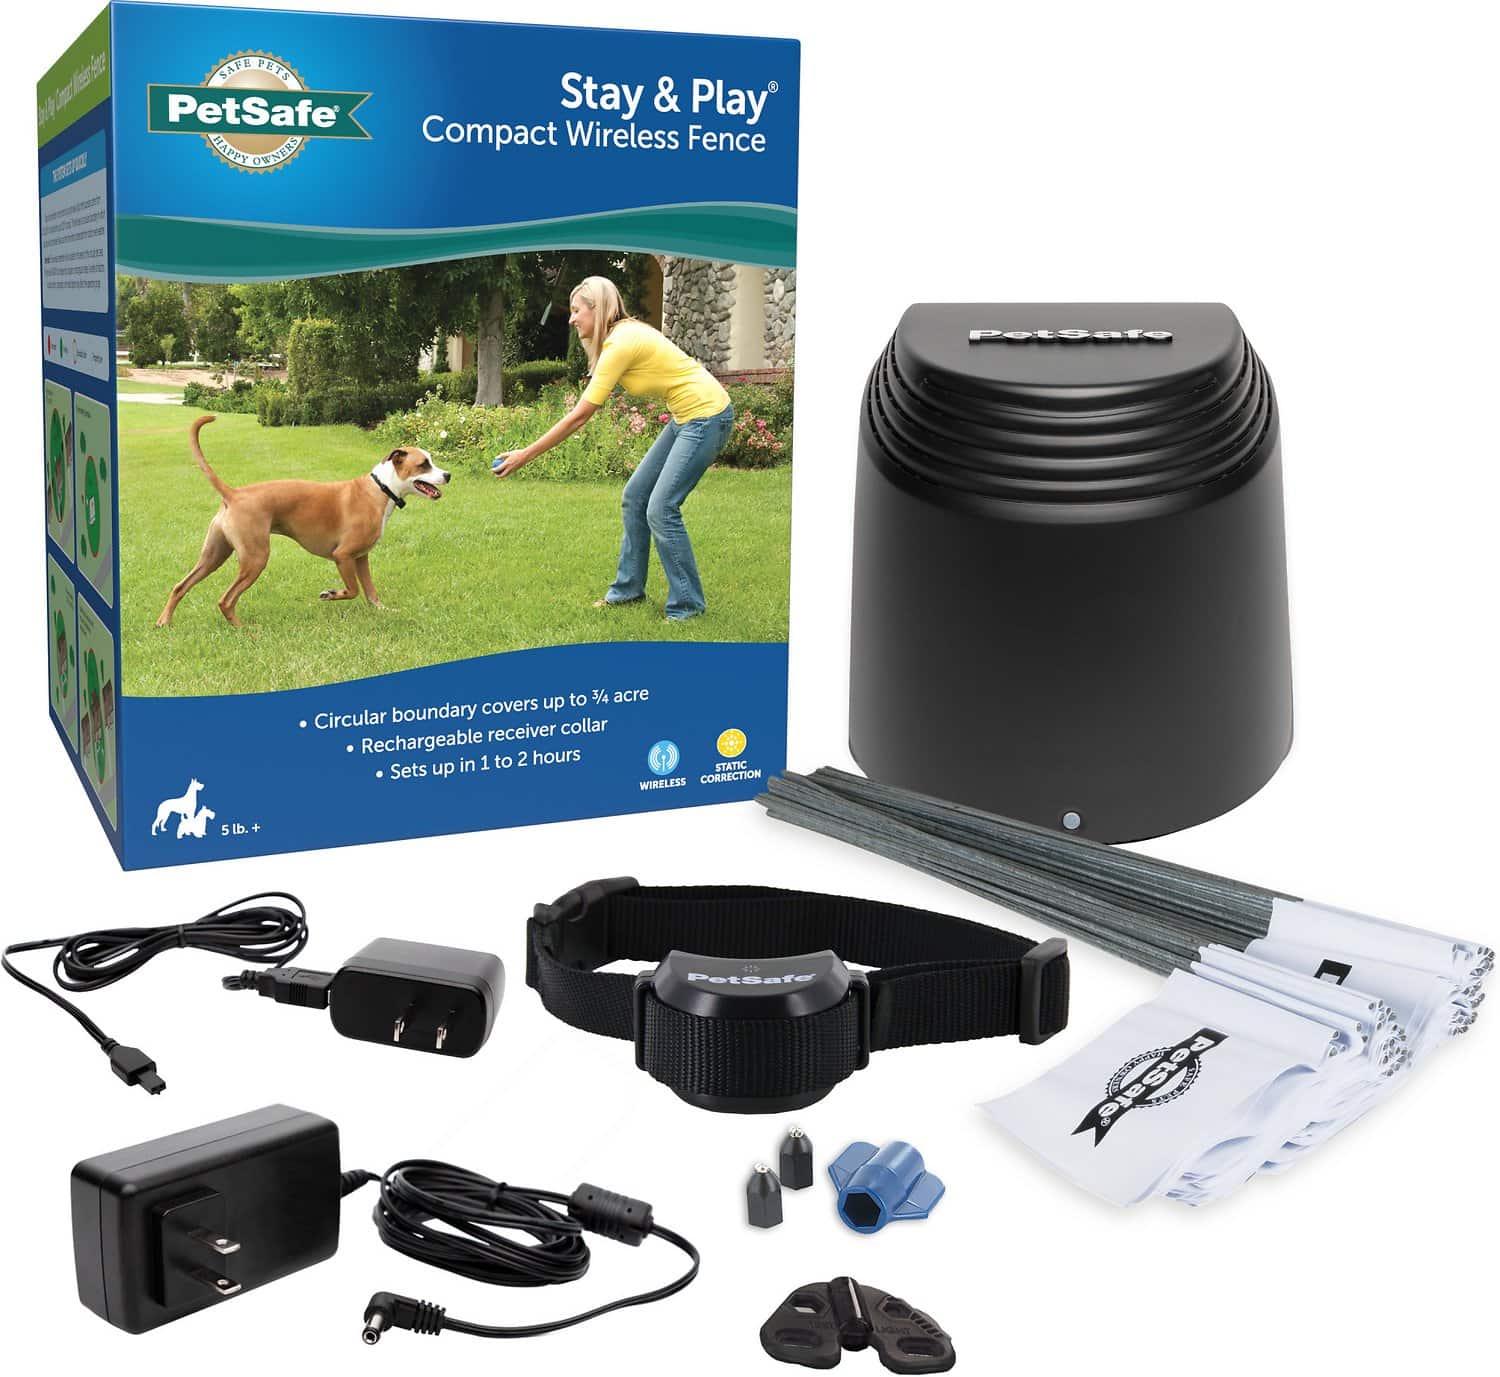 PetSafe Stay & Play compacte draadloze omheining (1)